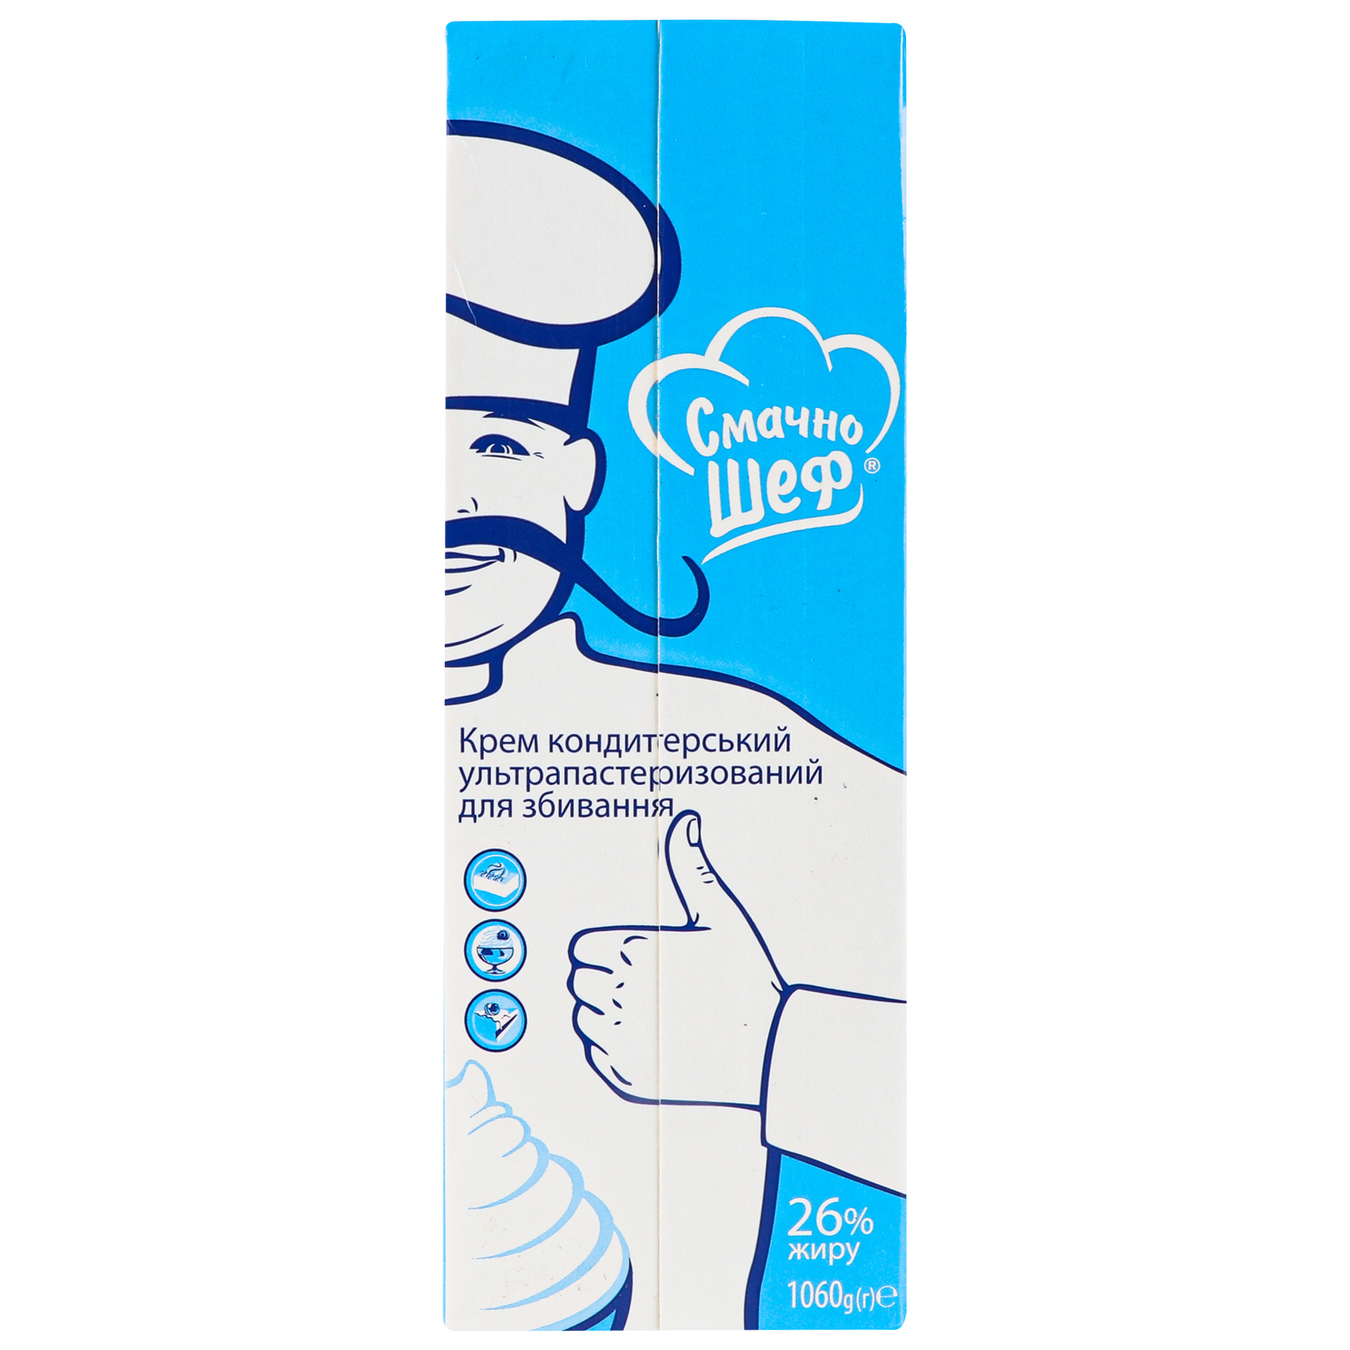 Cream Smachno Shef Сonfectionery UltraPasteurized 26% 1060g 3